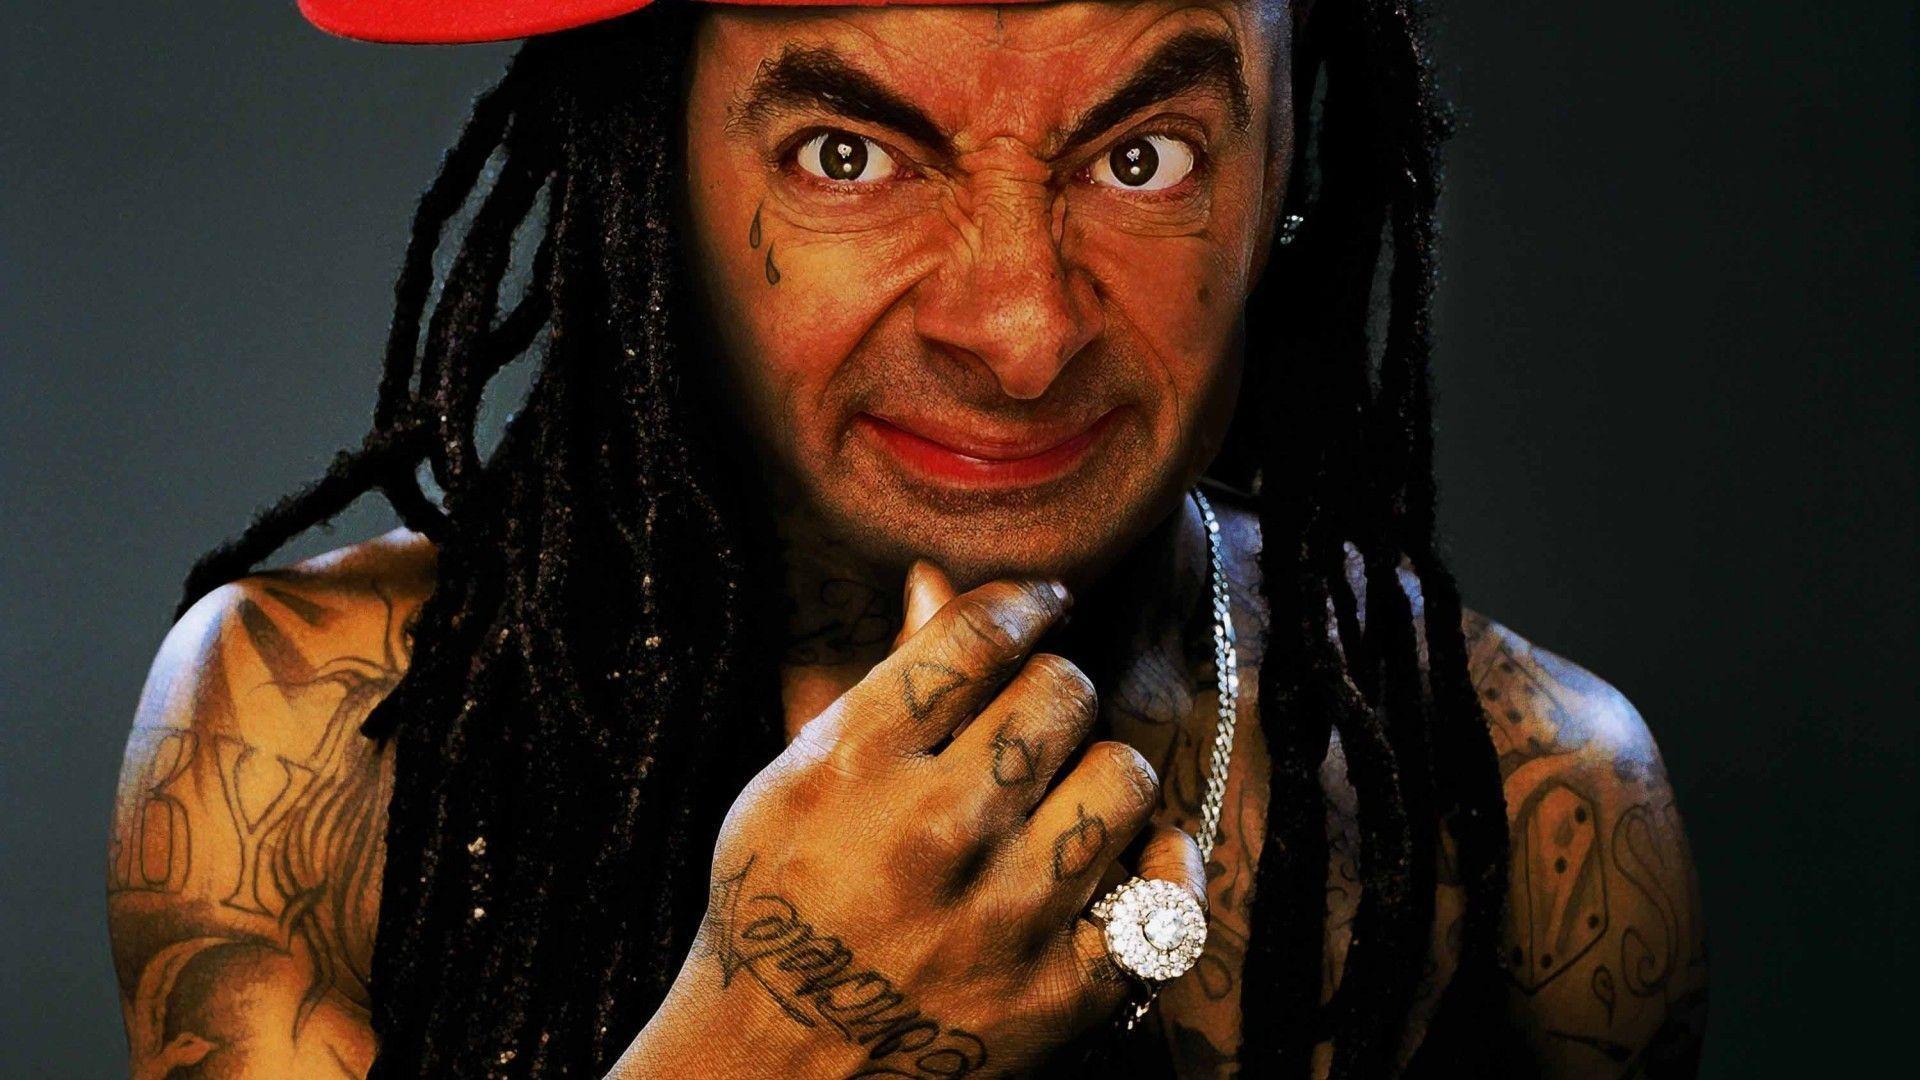 Mr. Bean as Lil Wayne